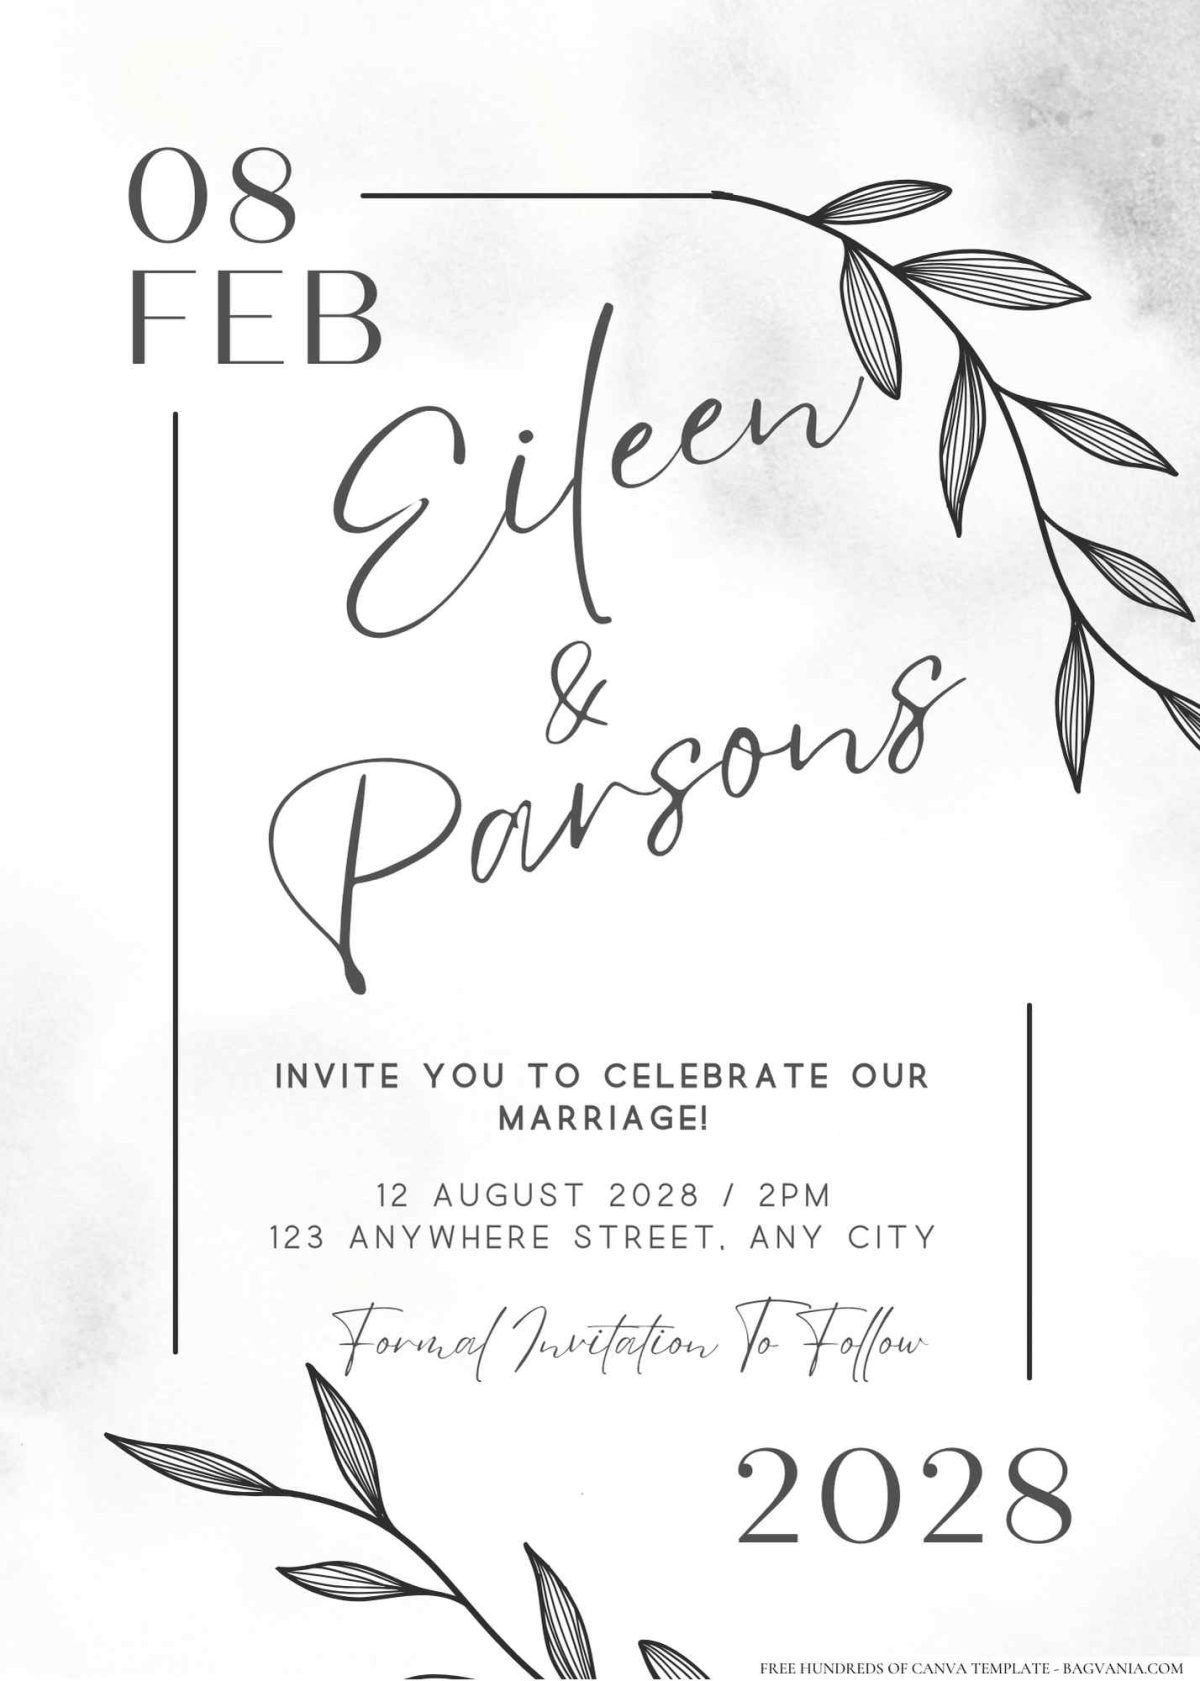 FREE Editable Monochromatic black and white floral prints wedding invitation